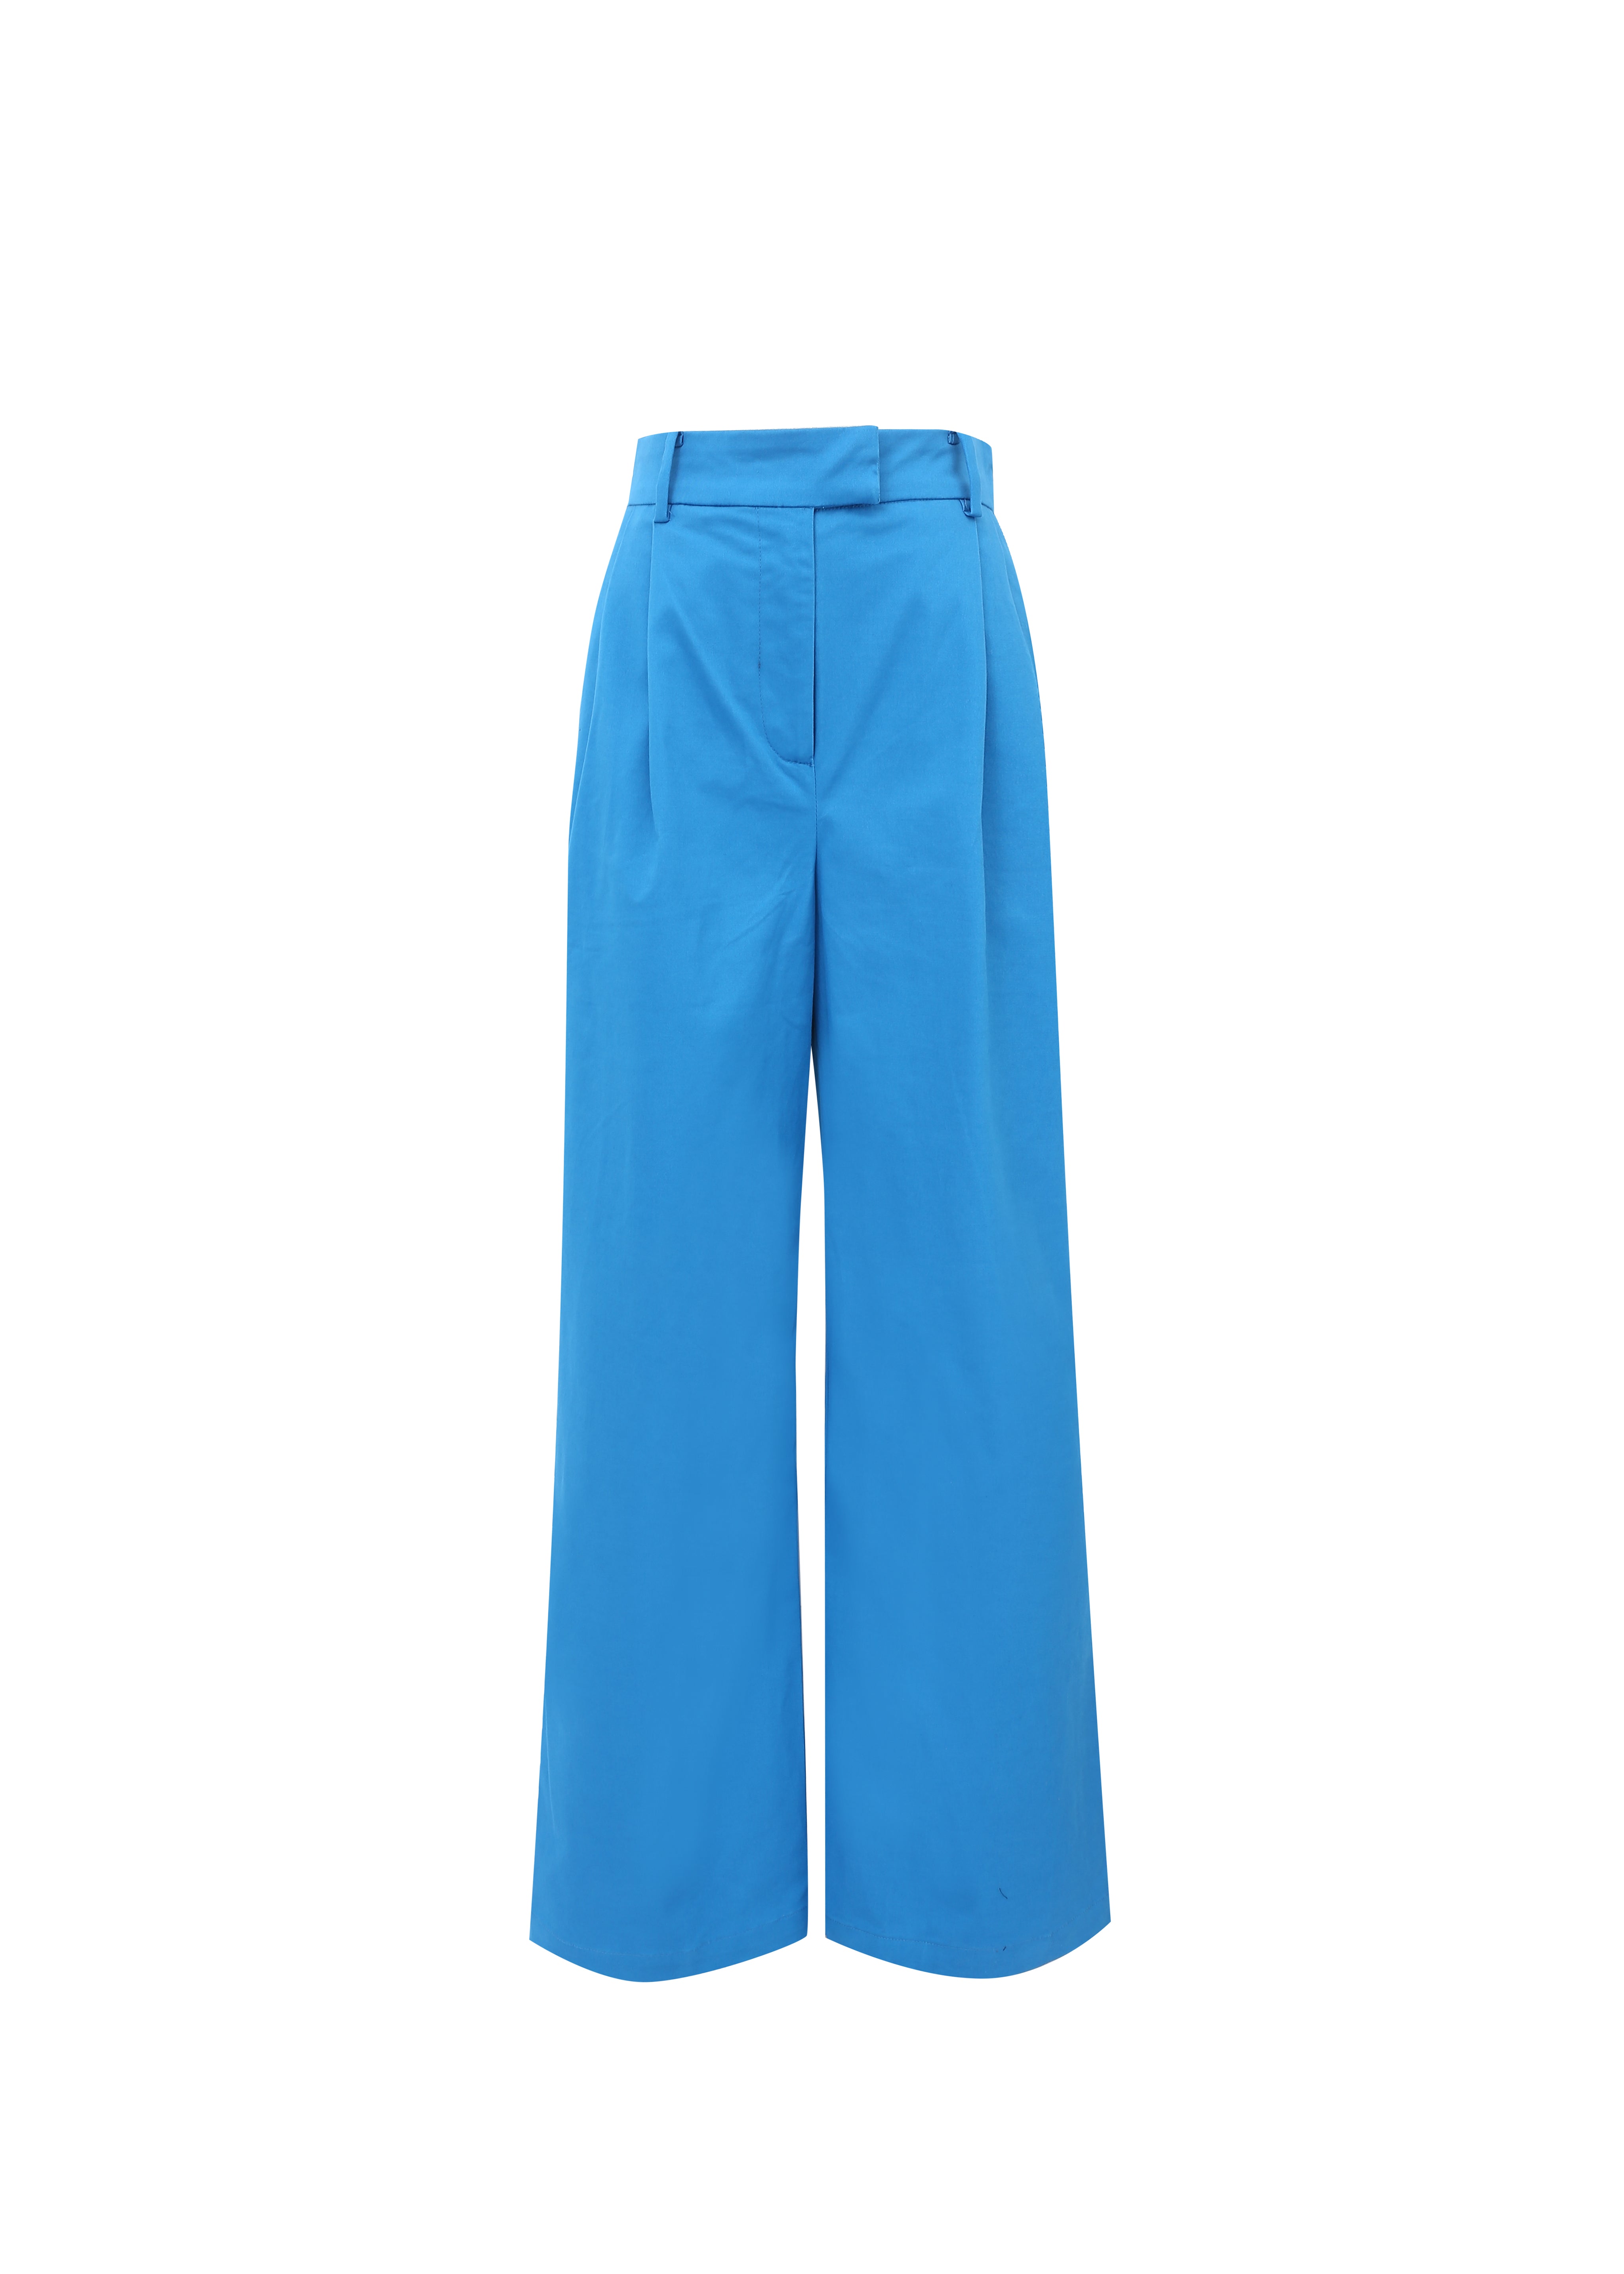 Pantalon ALBANE Bleu electrique